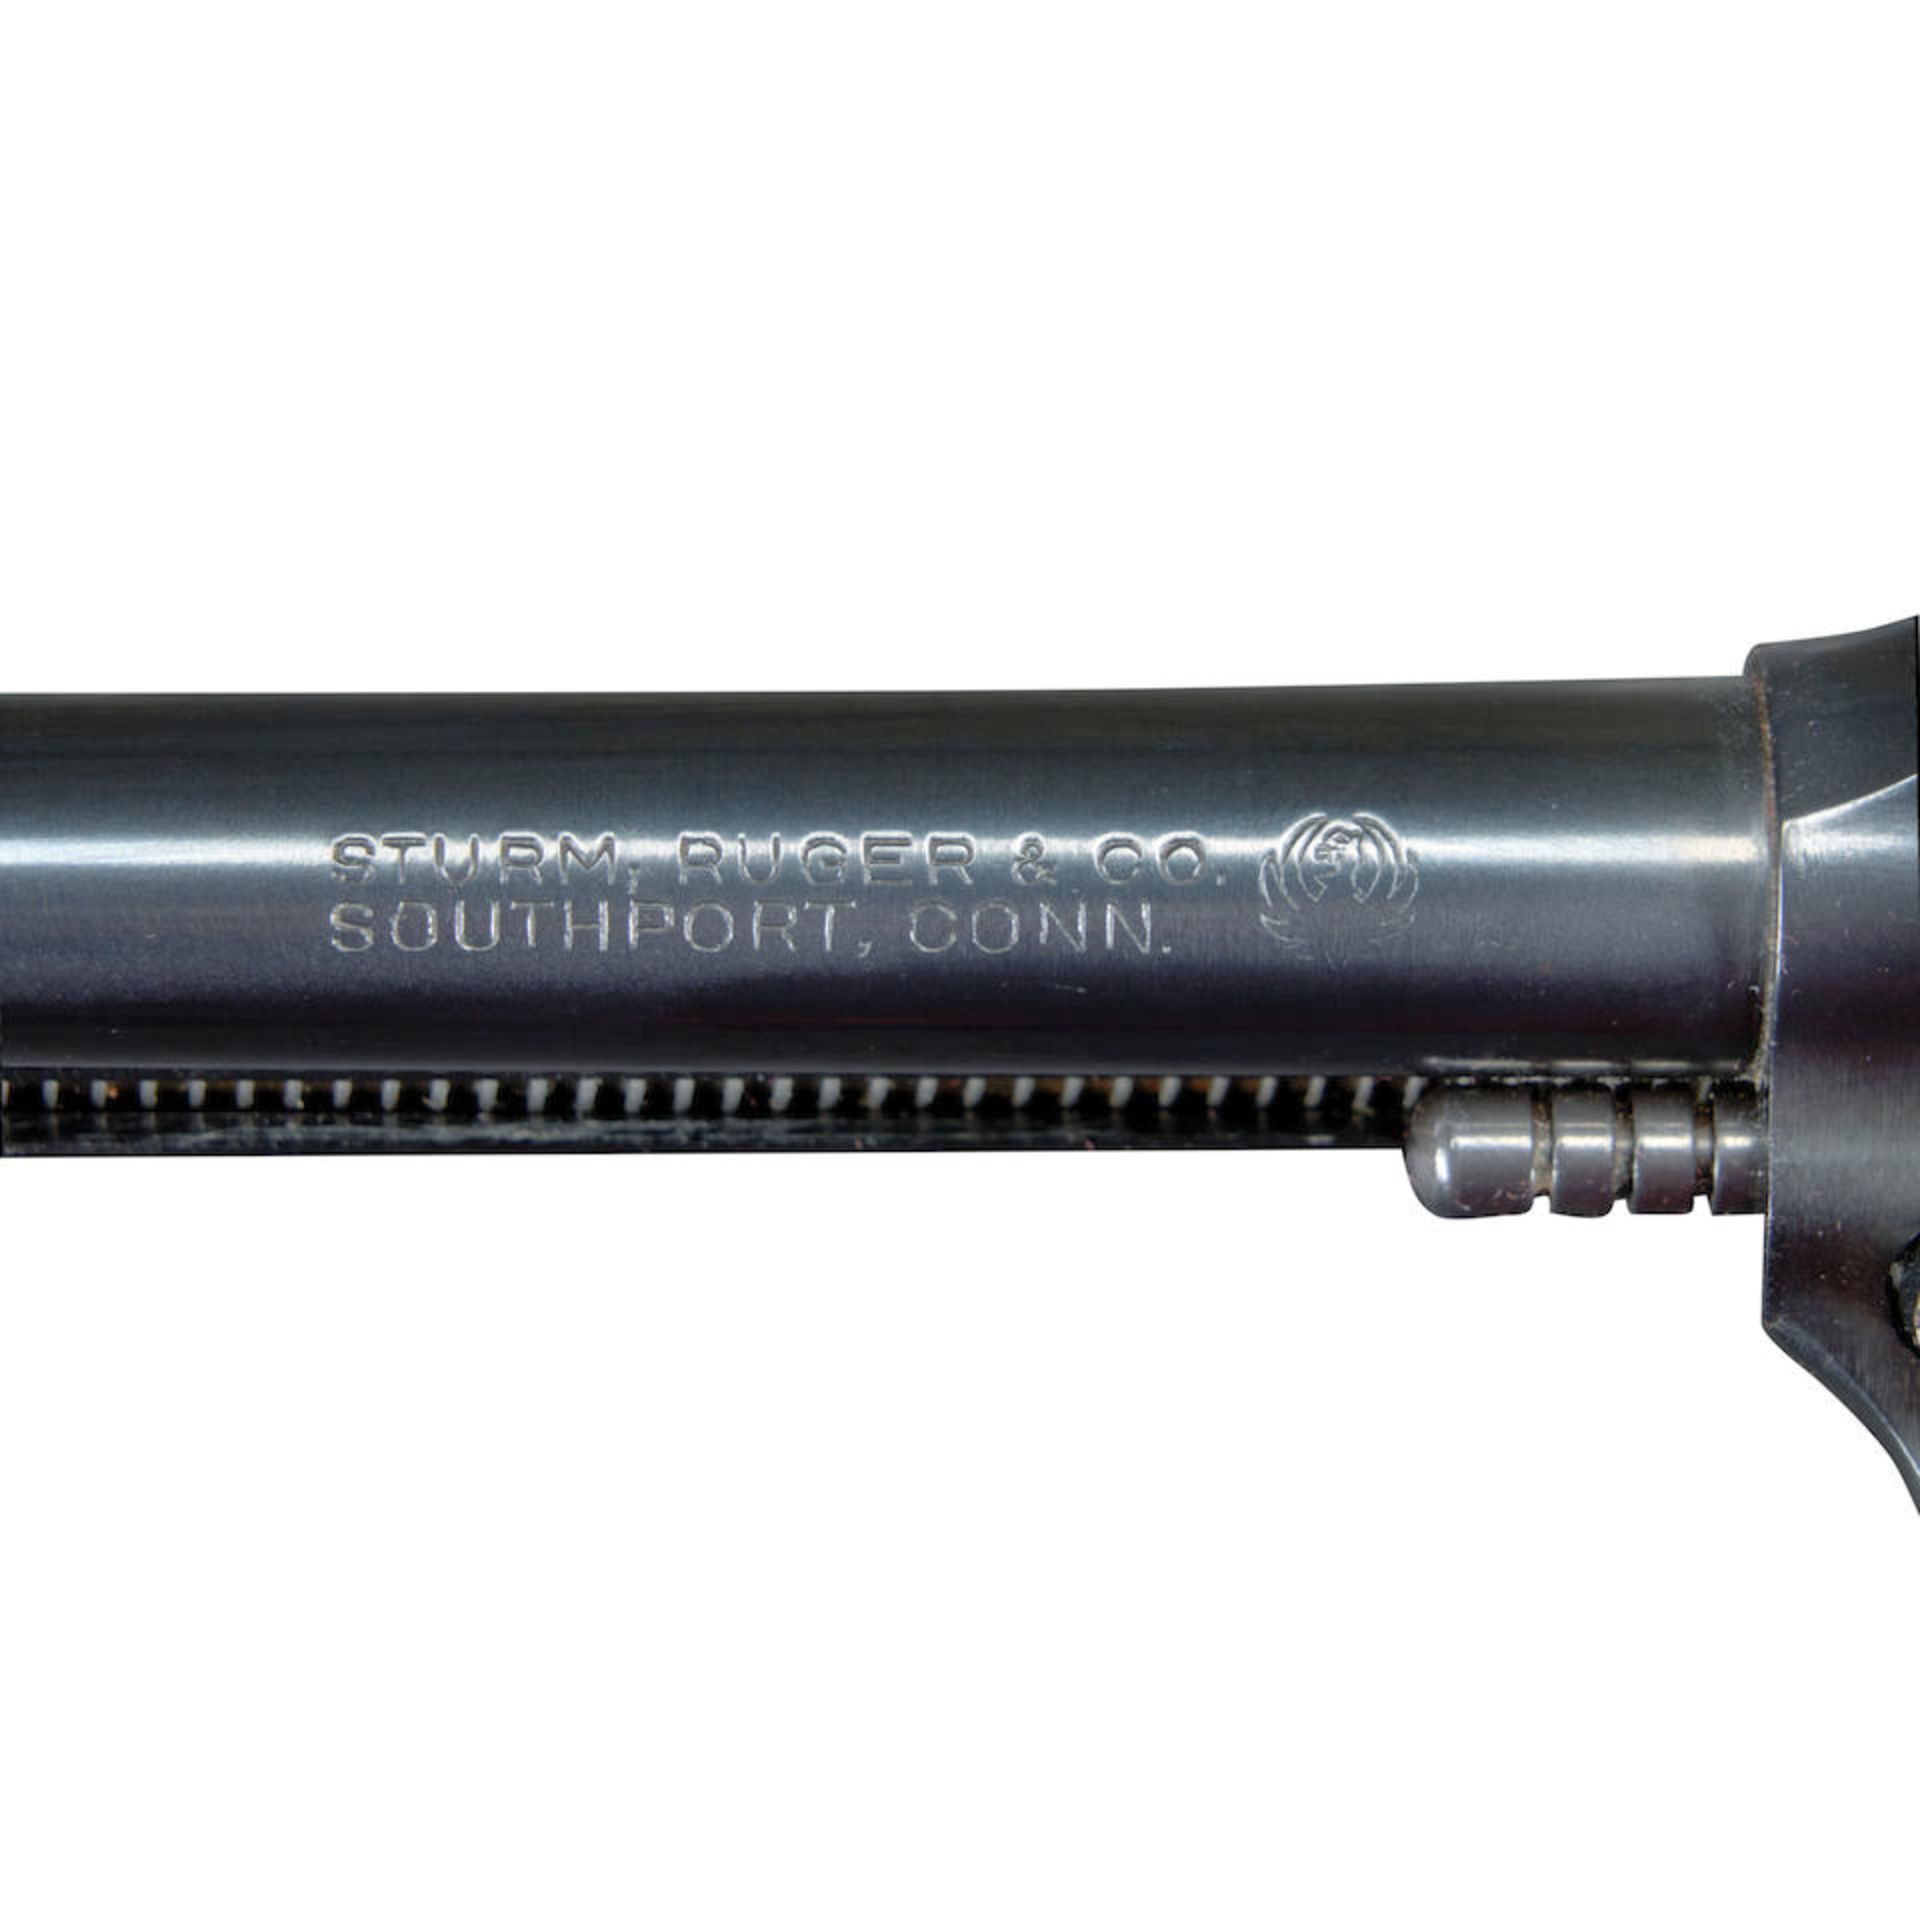 Ruger Super Bearcat No '.22 Cal.' on Barrel Revolver, Curio or Relic firearm - Bild 3 aus 5